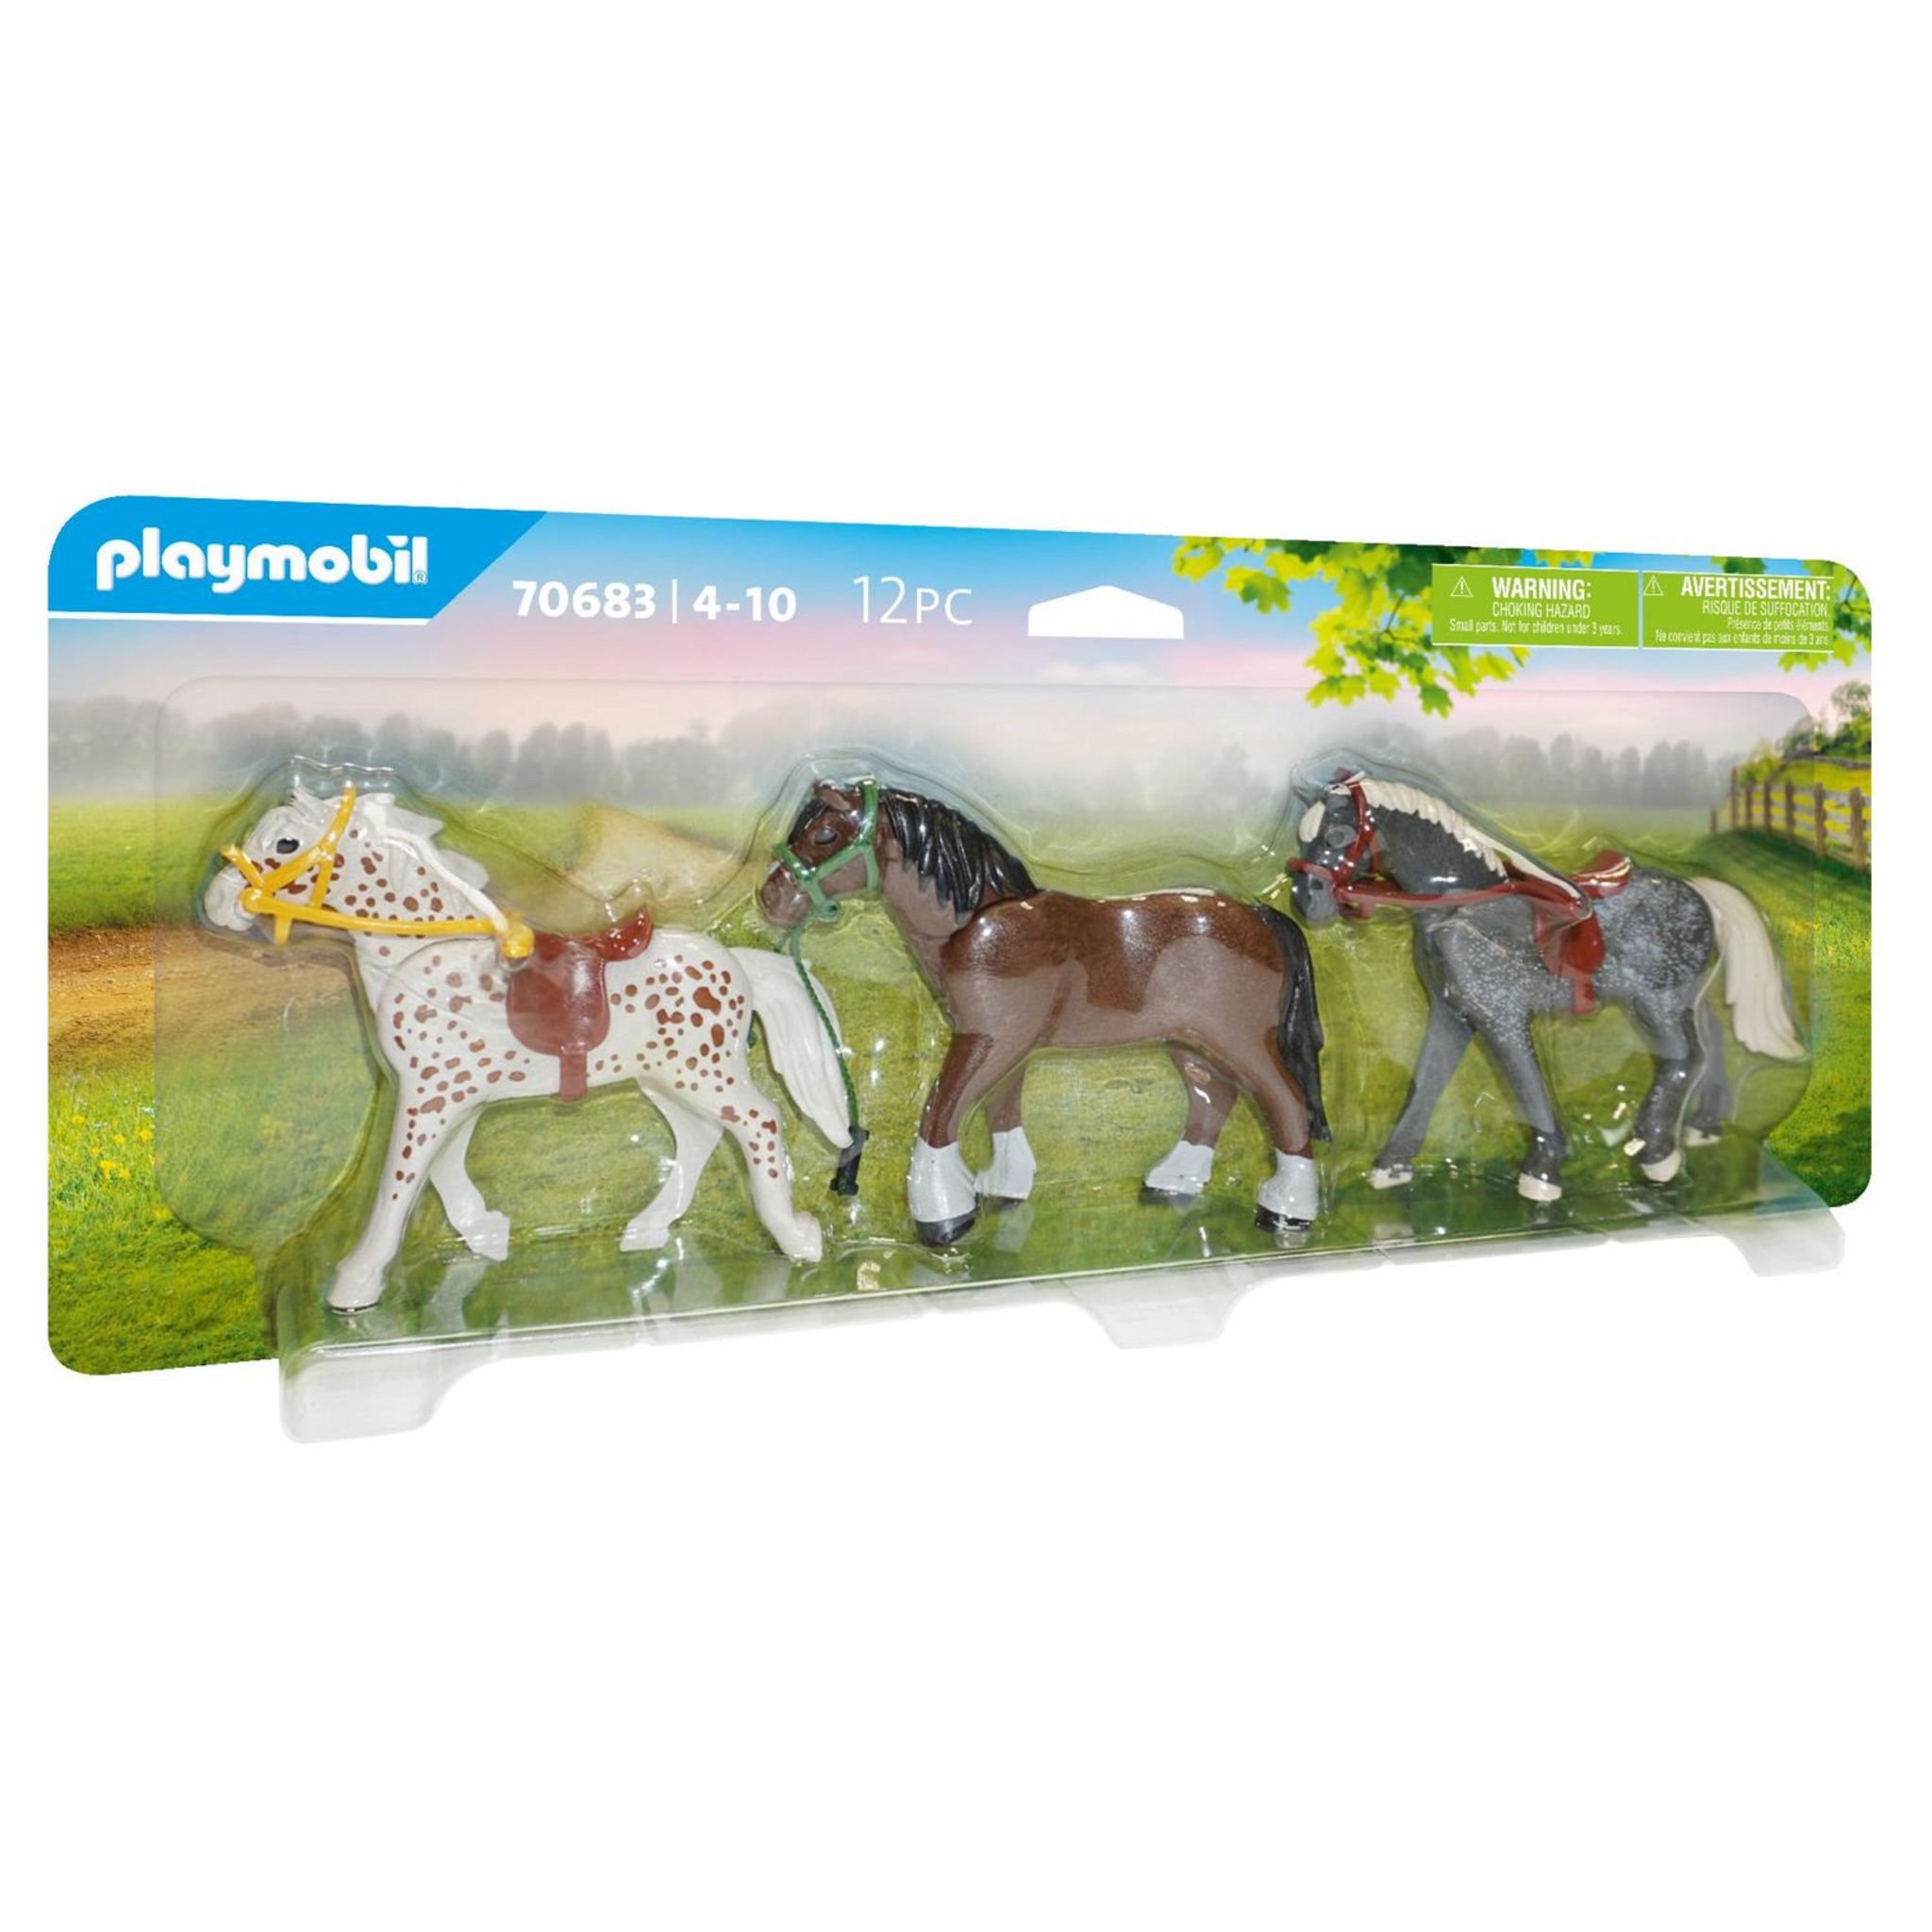 70996 - Playmobil Country - Parcours d'obstacles avec chevaux